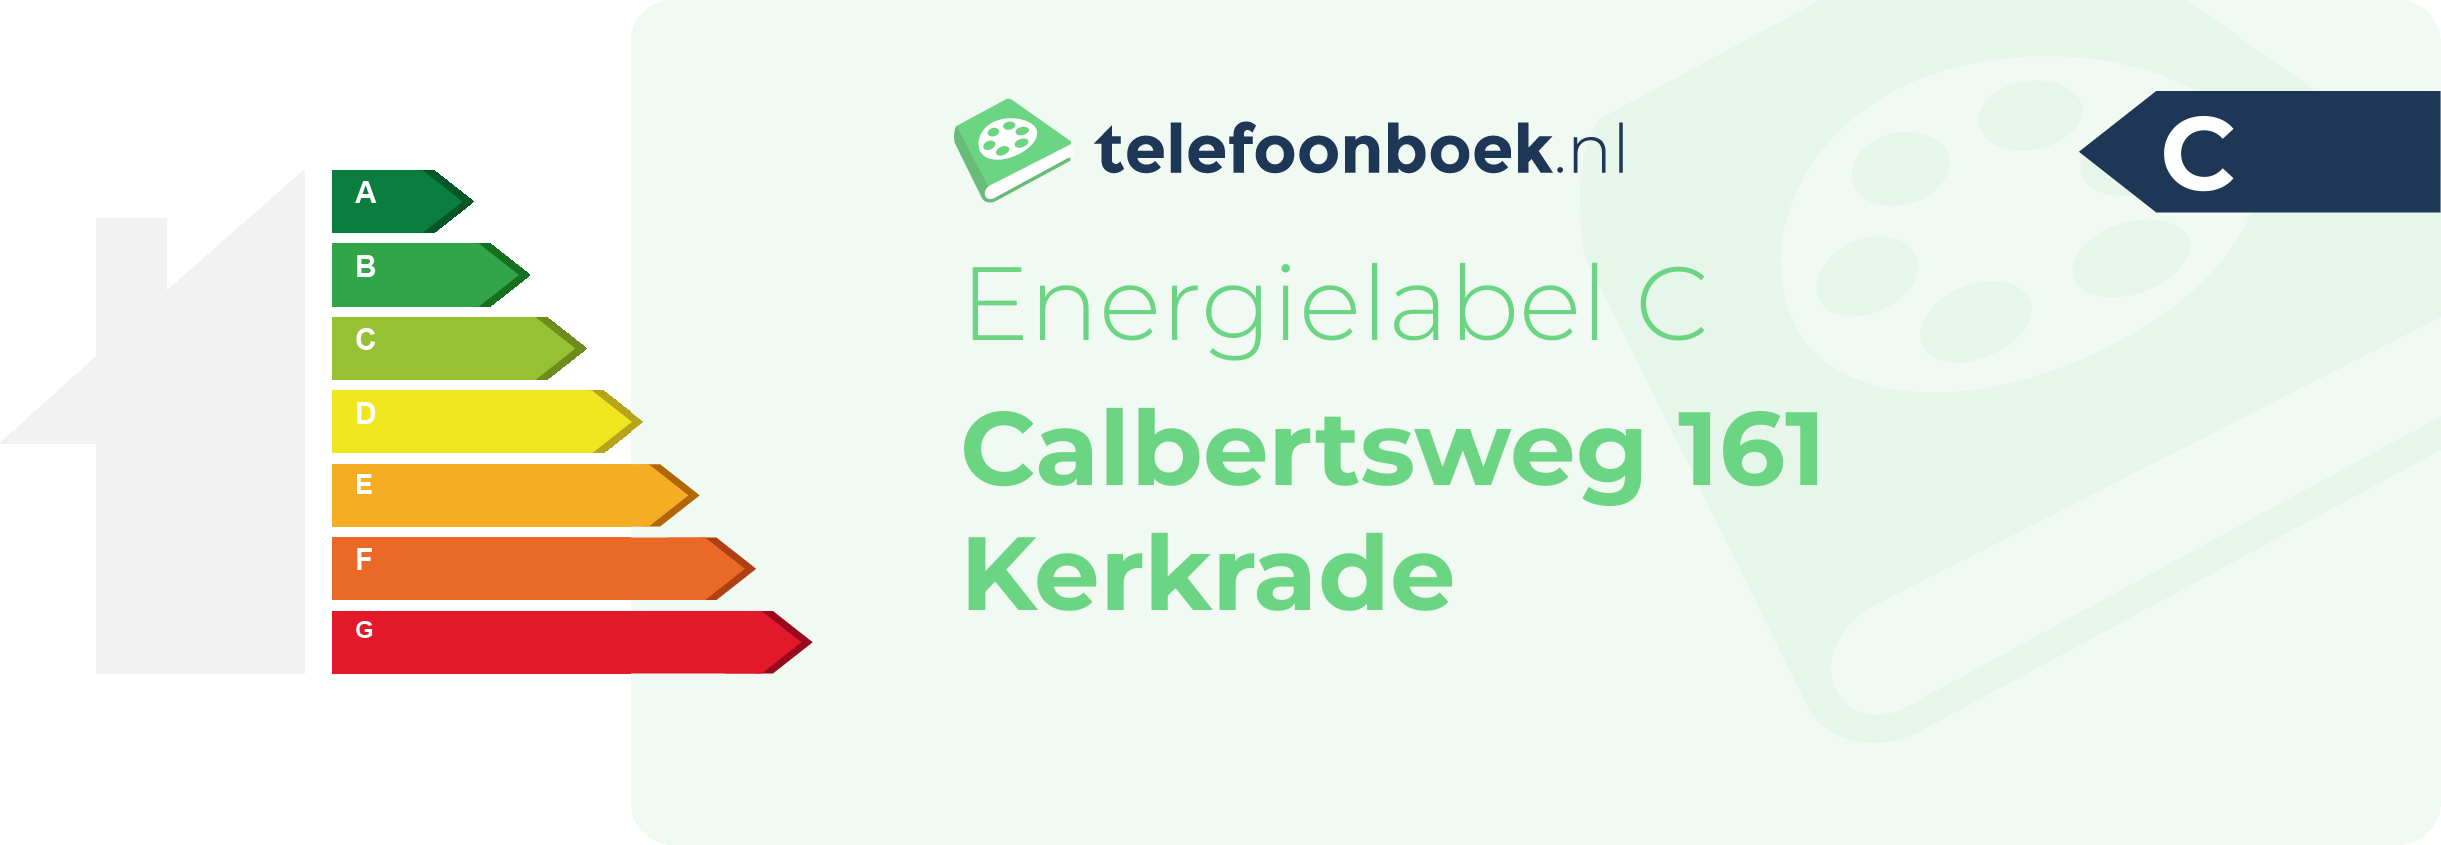 Energielabel Calbertsweg 161 Kerkrade